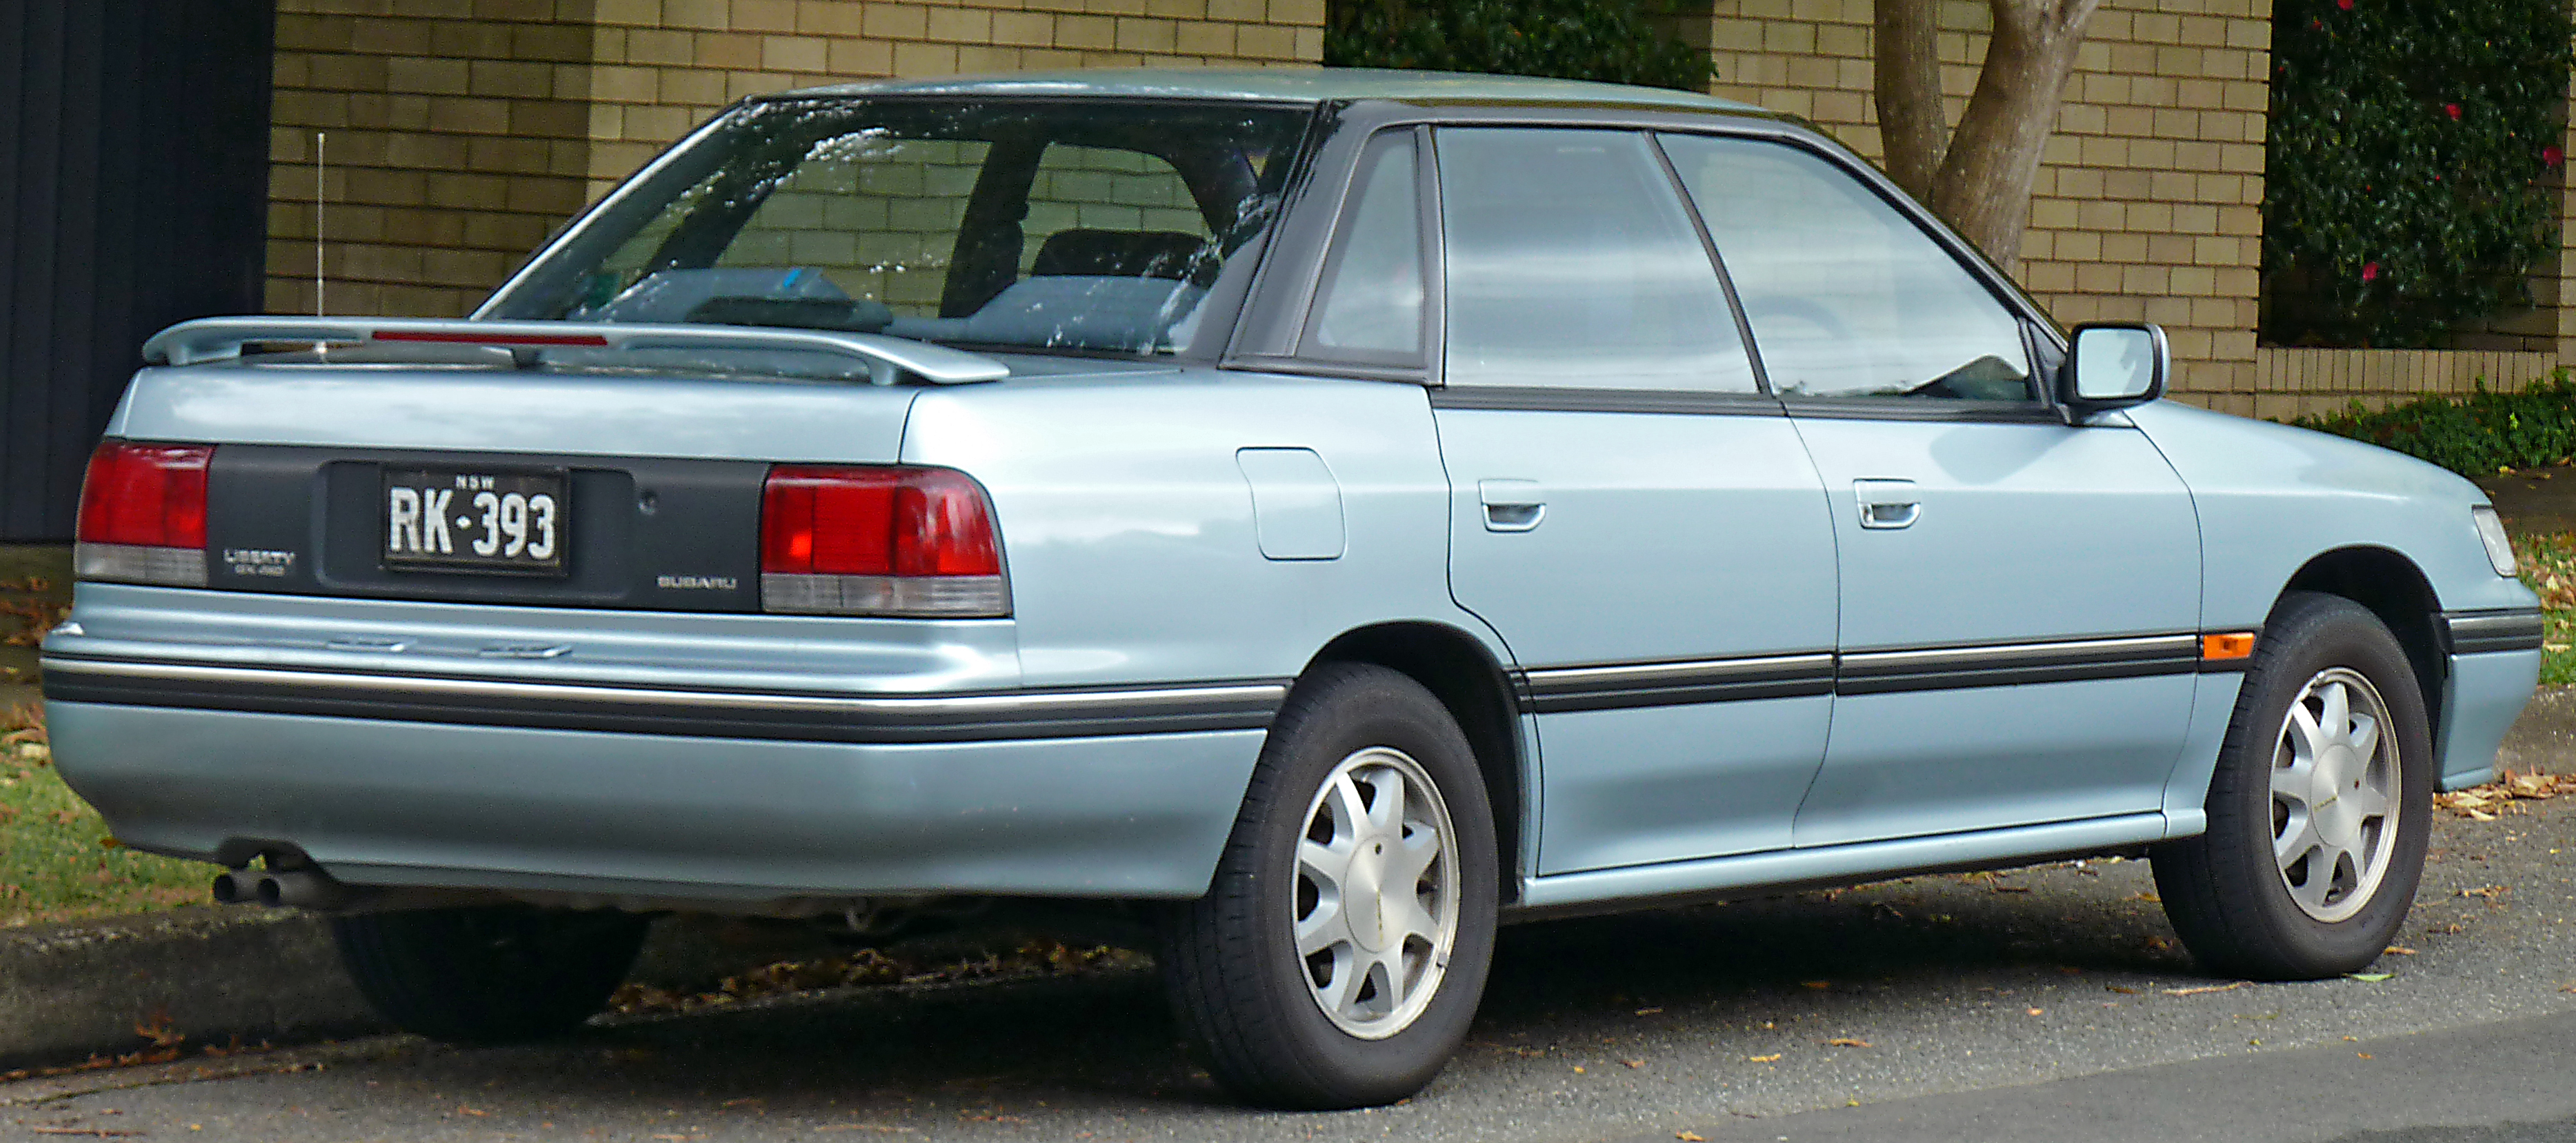 Subaru Legacy 1994 #1